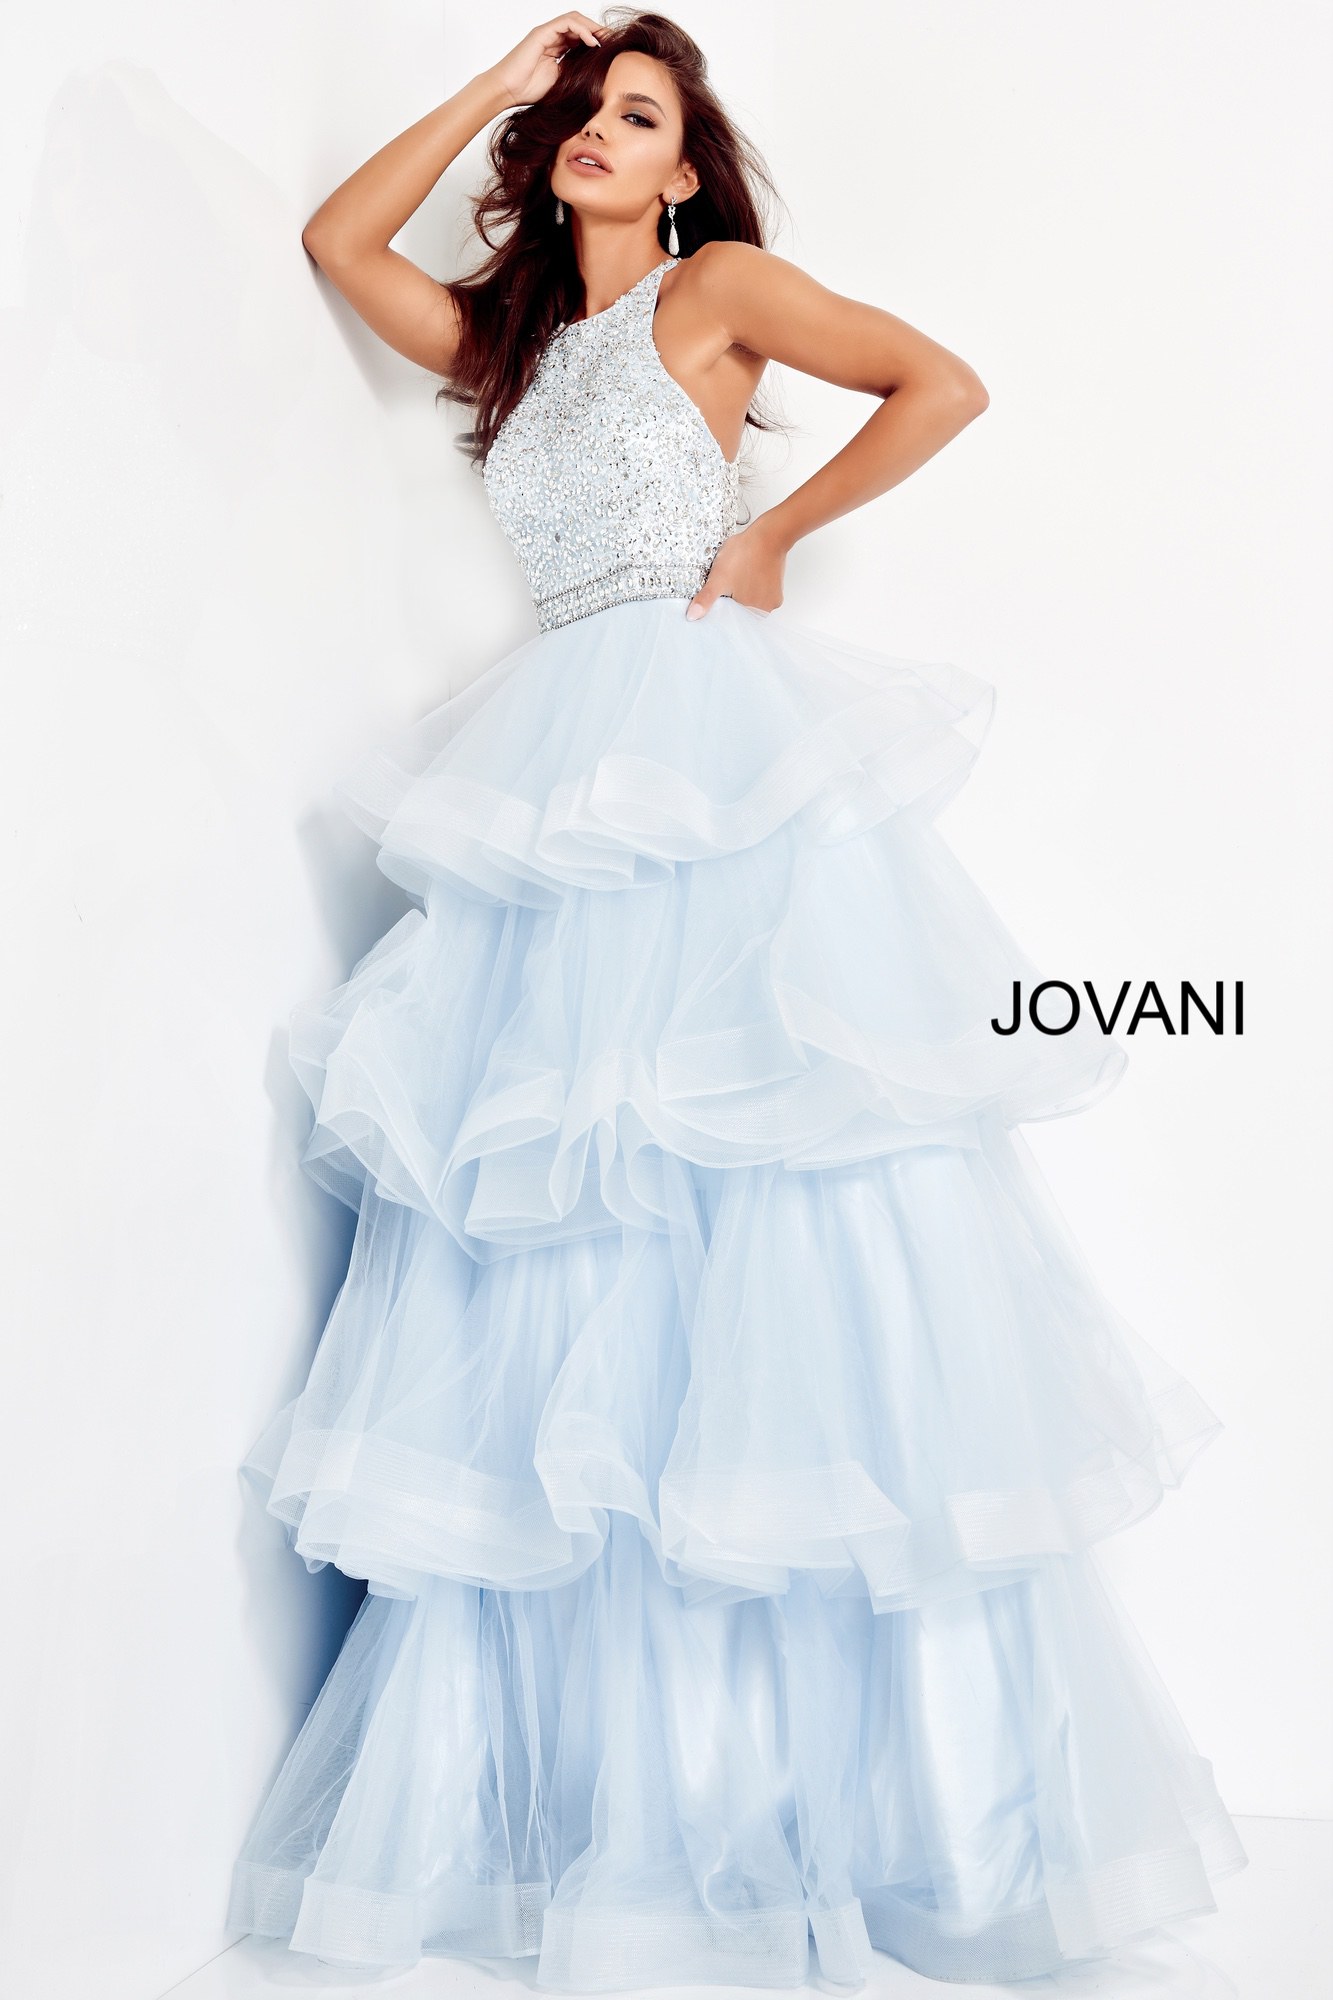 Jovani 00461 Light Blue Embellished Bodice Prom Ballgown